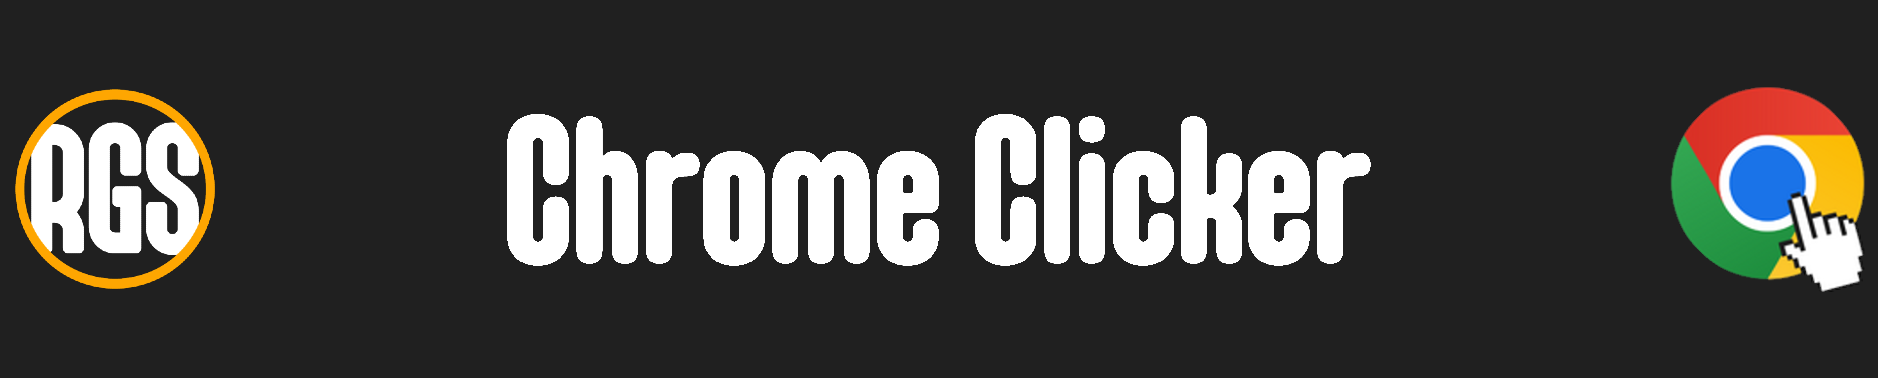 Chrome Clicker (ENDING UPDATE) or (final update)